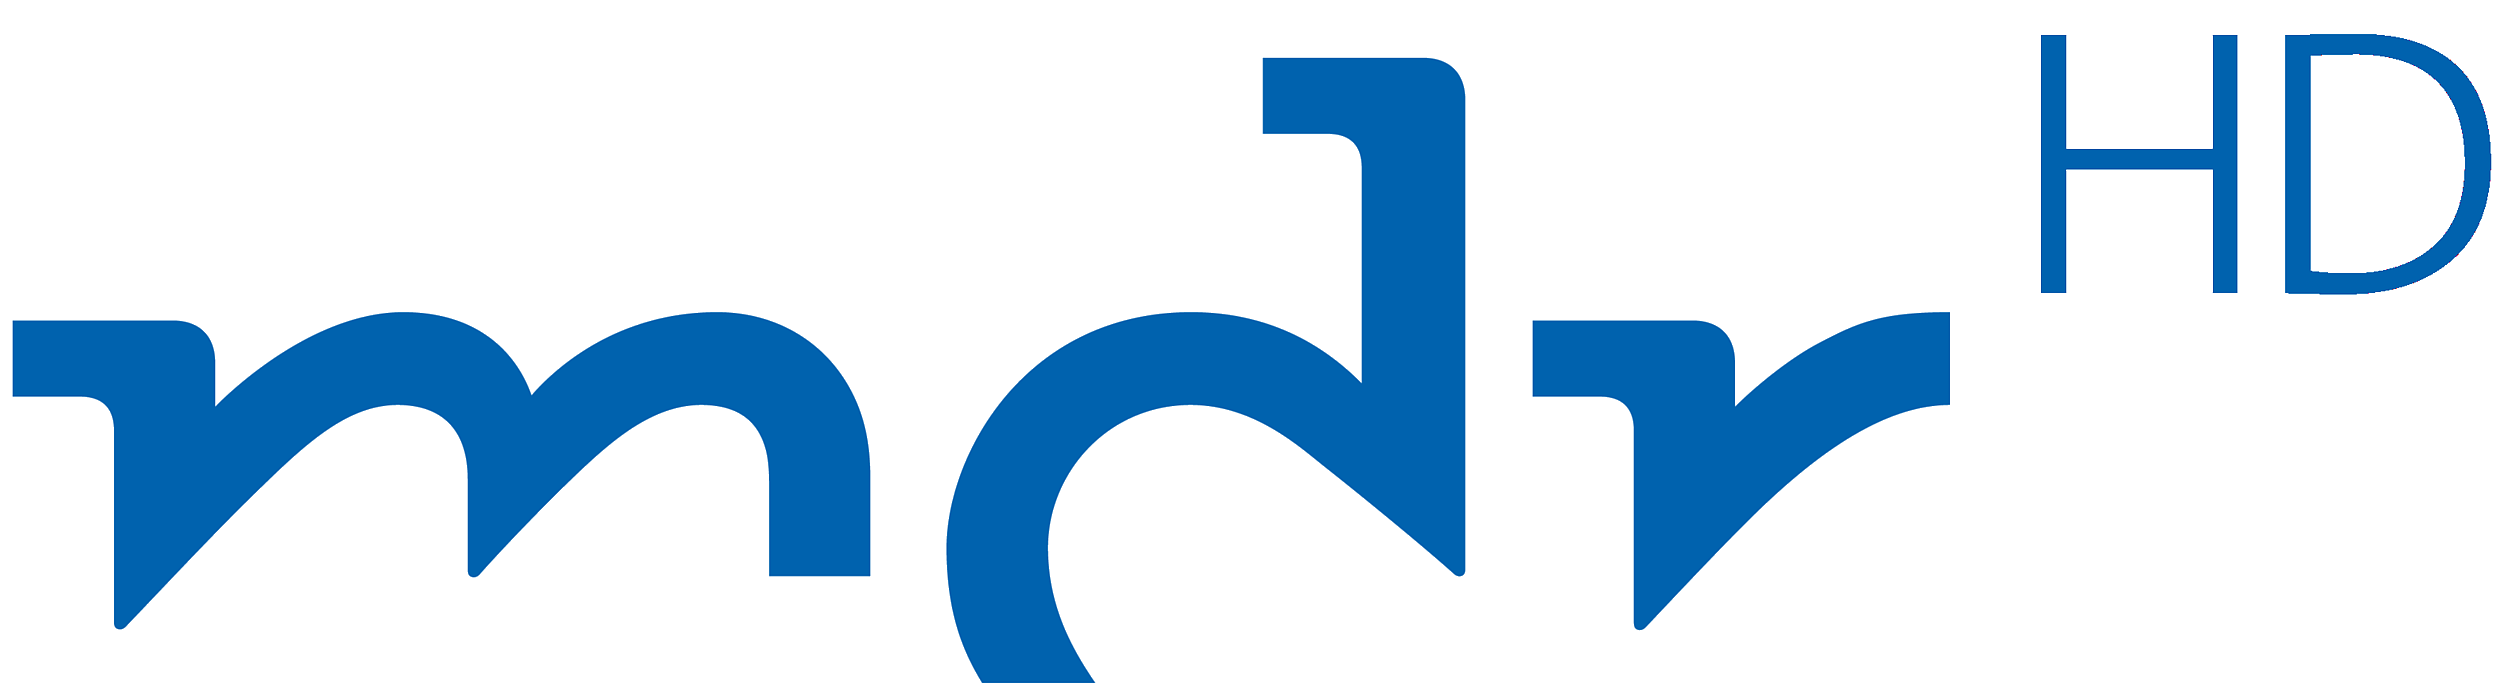 MDR Logo - File:Mdr Fernsehen HD Logo 2017.png - Wikimedia Commons